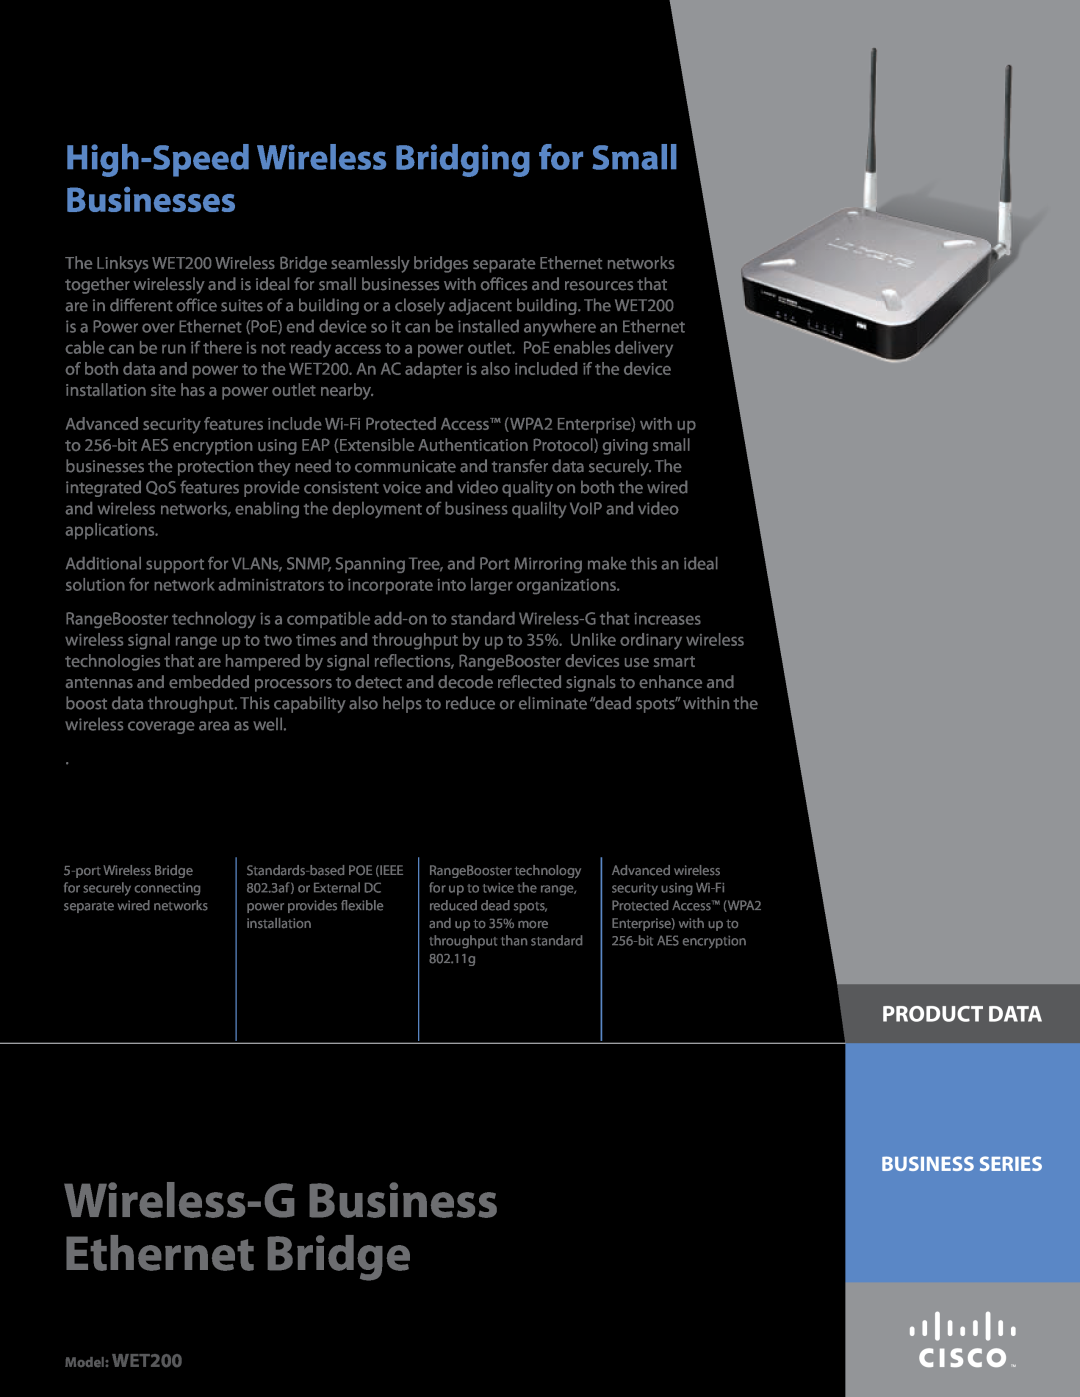 Linksys WET200 manual Product Data, Business Series, Wireless-G Business Ethernet Bridge 